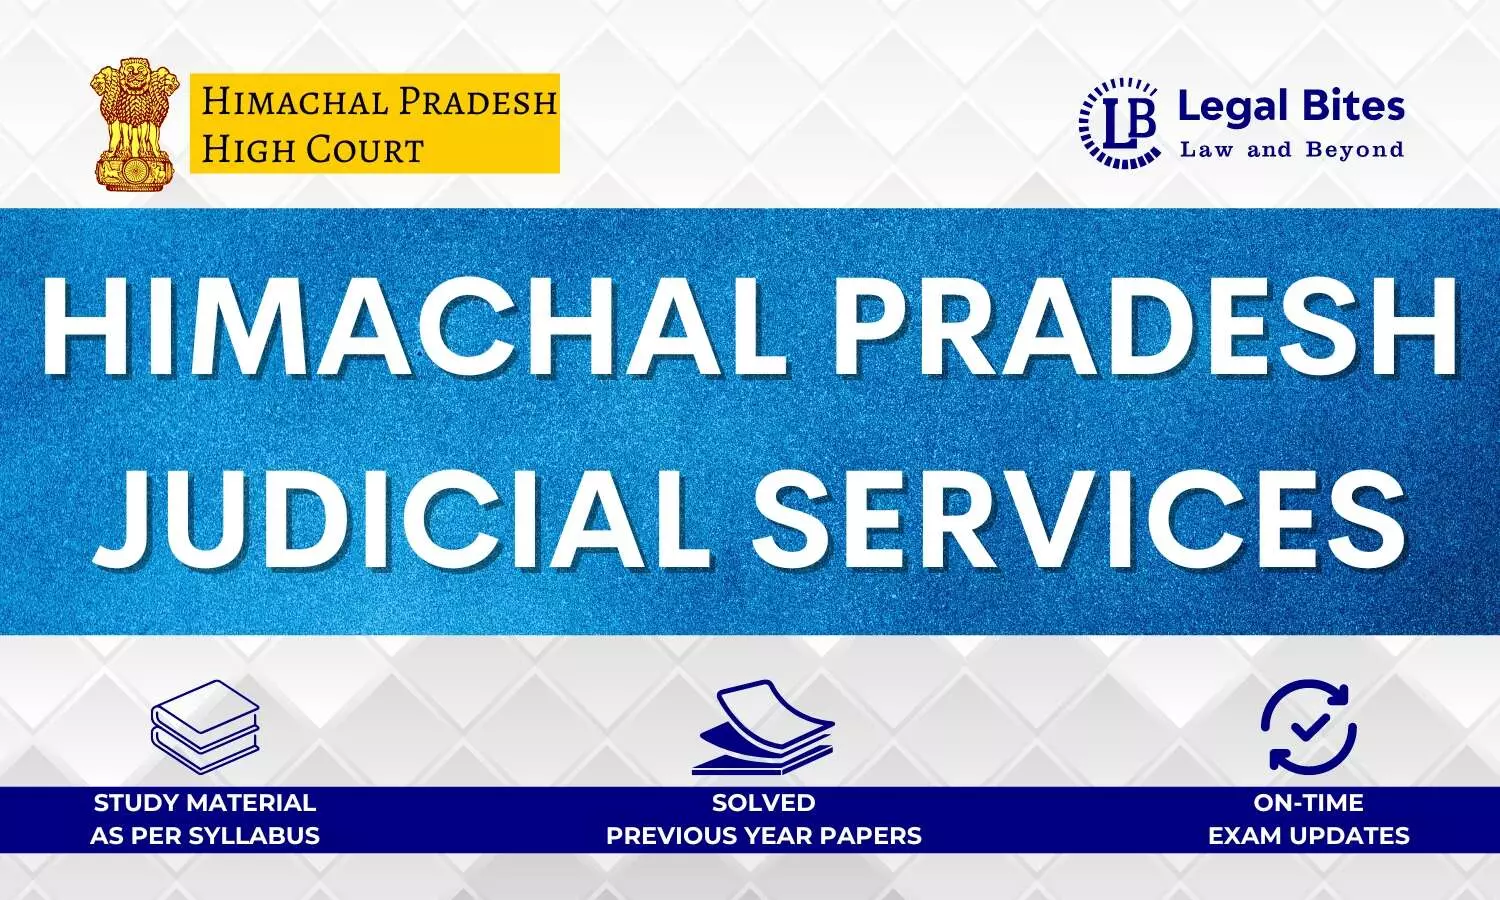 Himachal Pradesh Judicial Services Examination: Study Material, Test Series and Tips